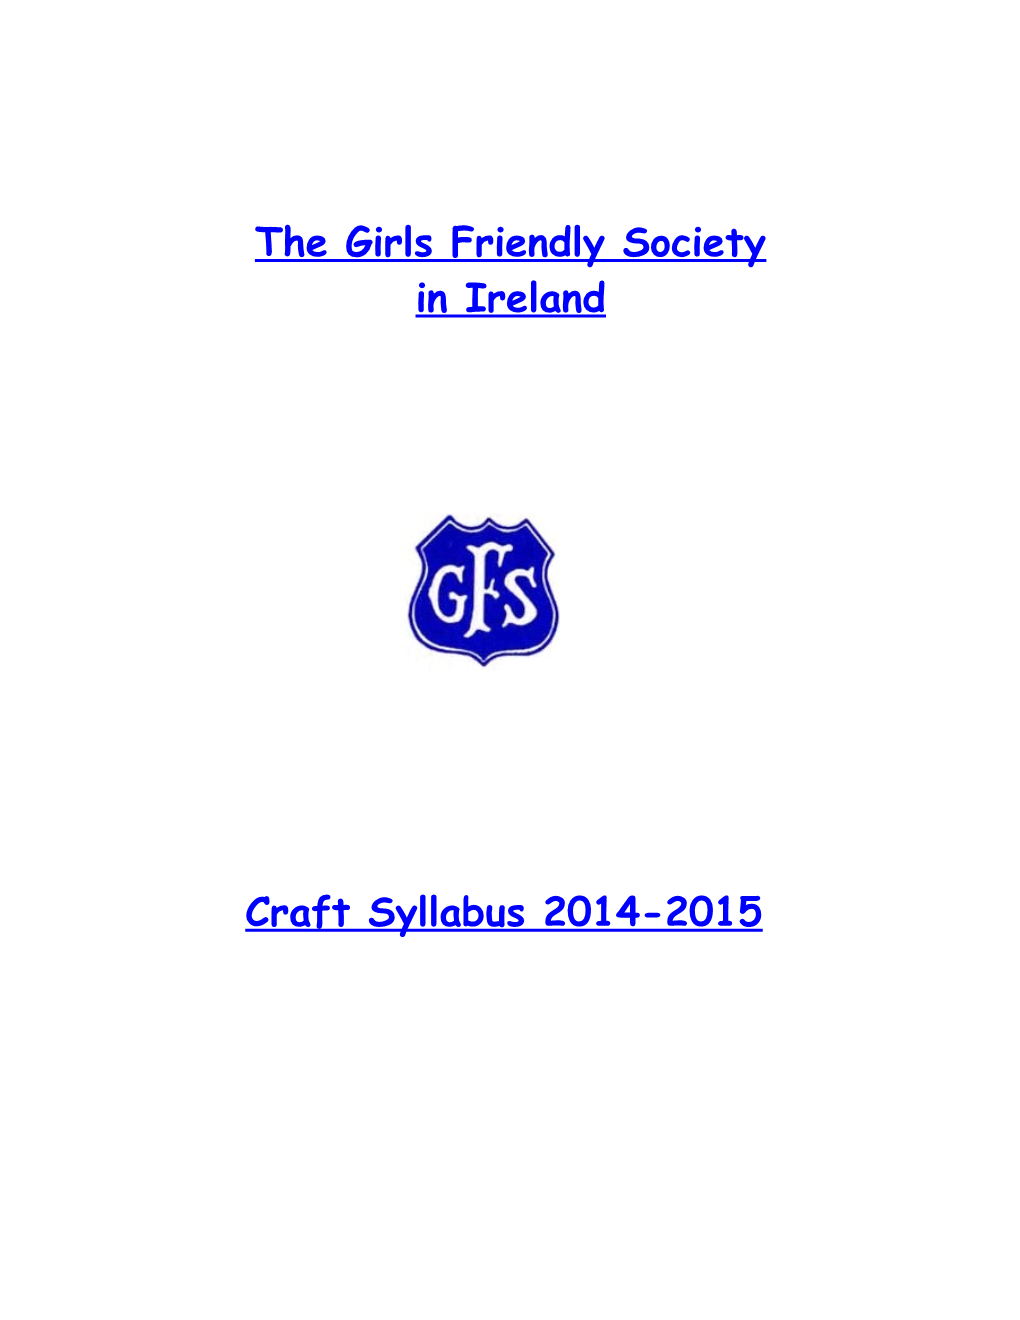 All Ireland Handcraft Syllabus 2010-2011